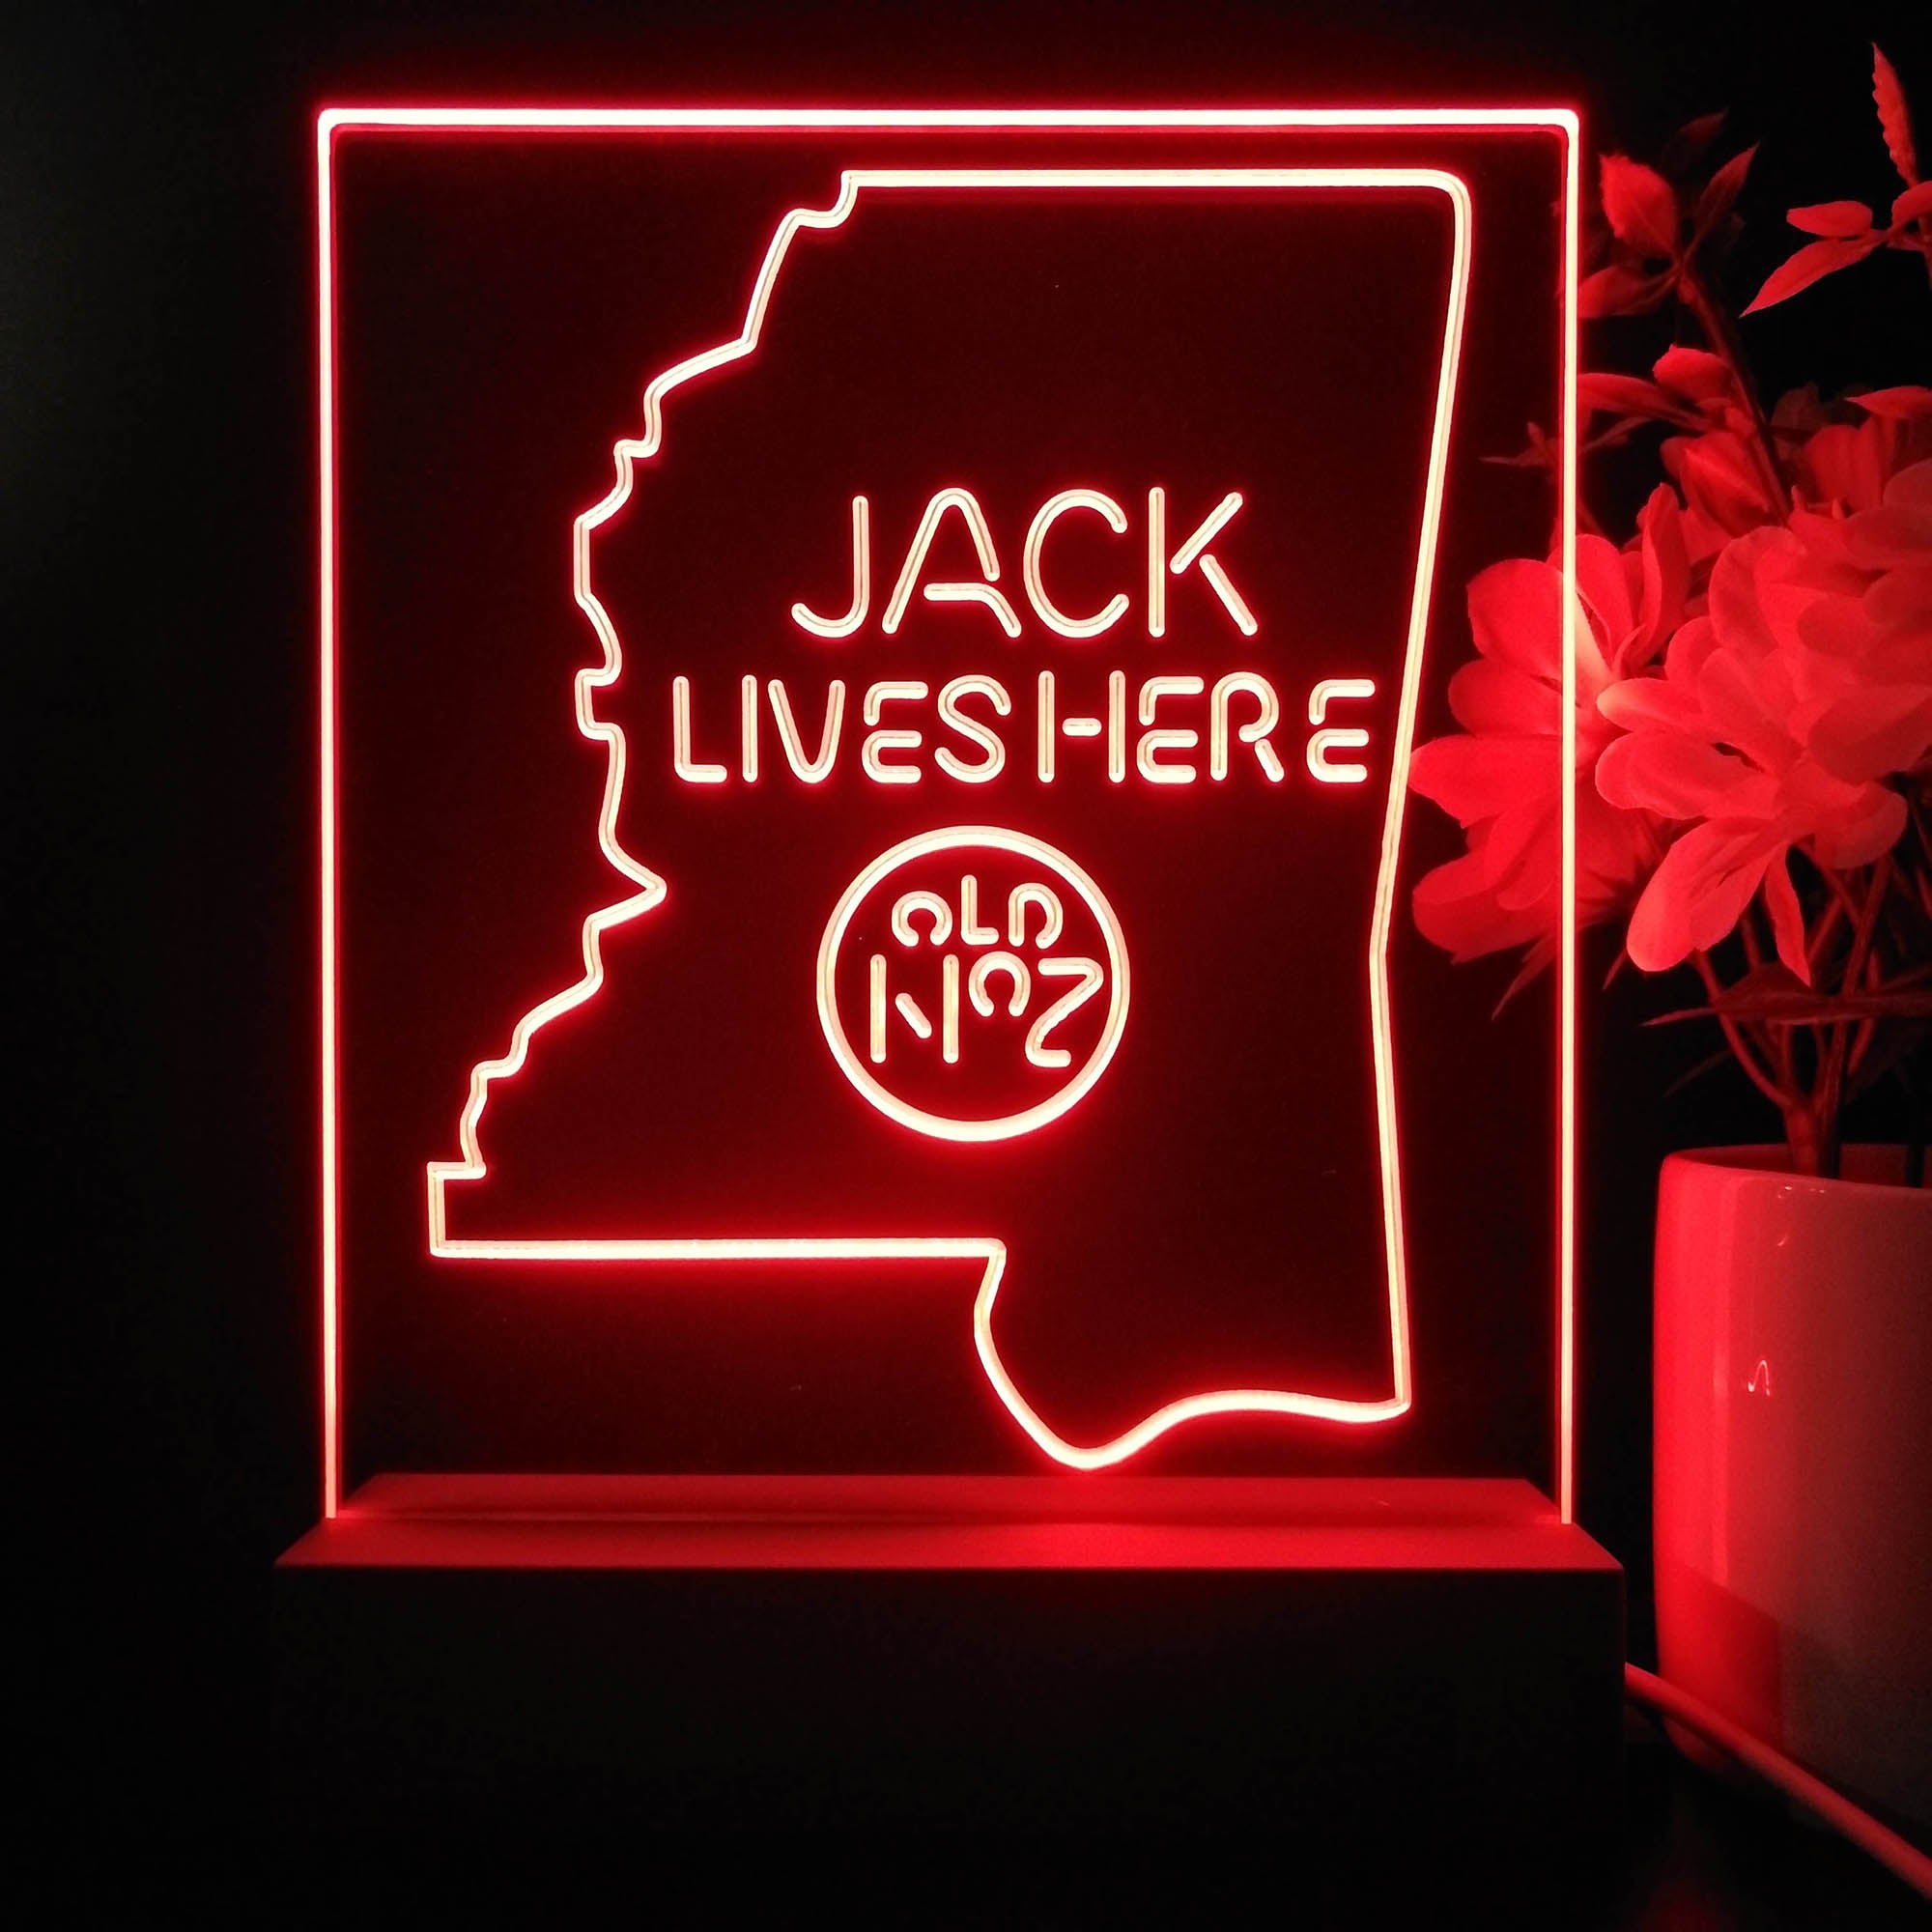 Mississippi Jack Lives Here Night Light Neon Pub Bar Lamp